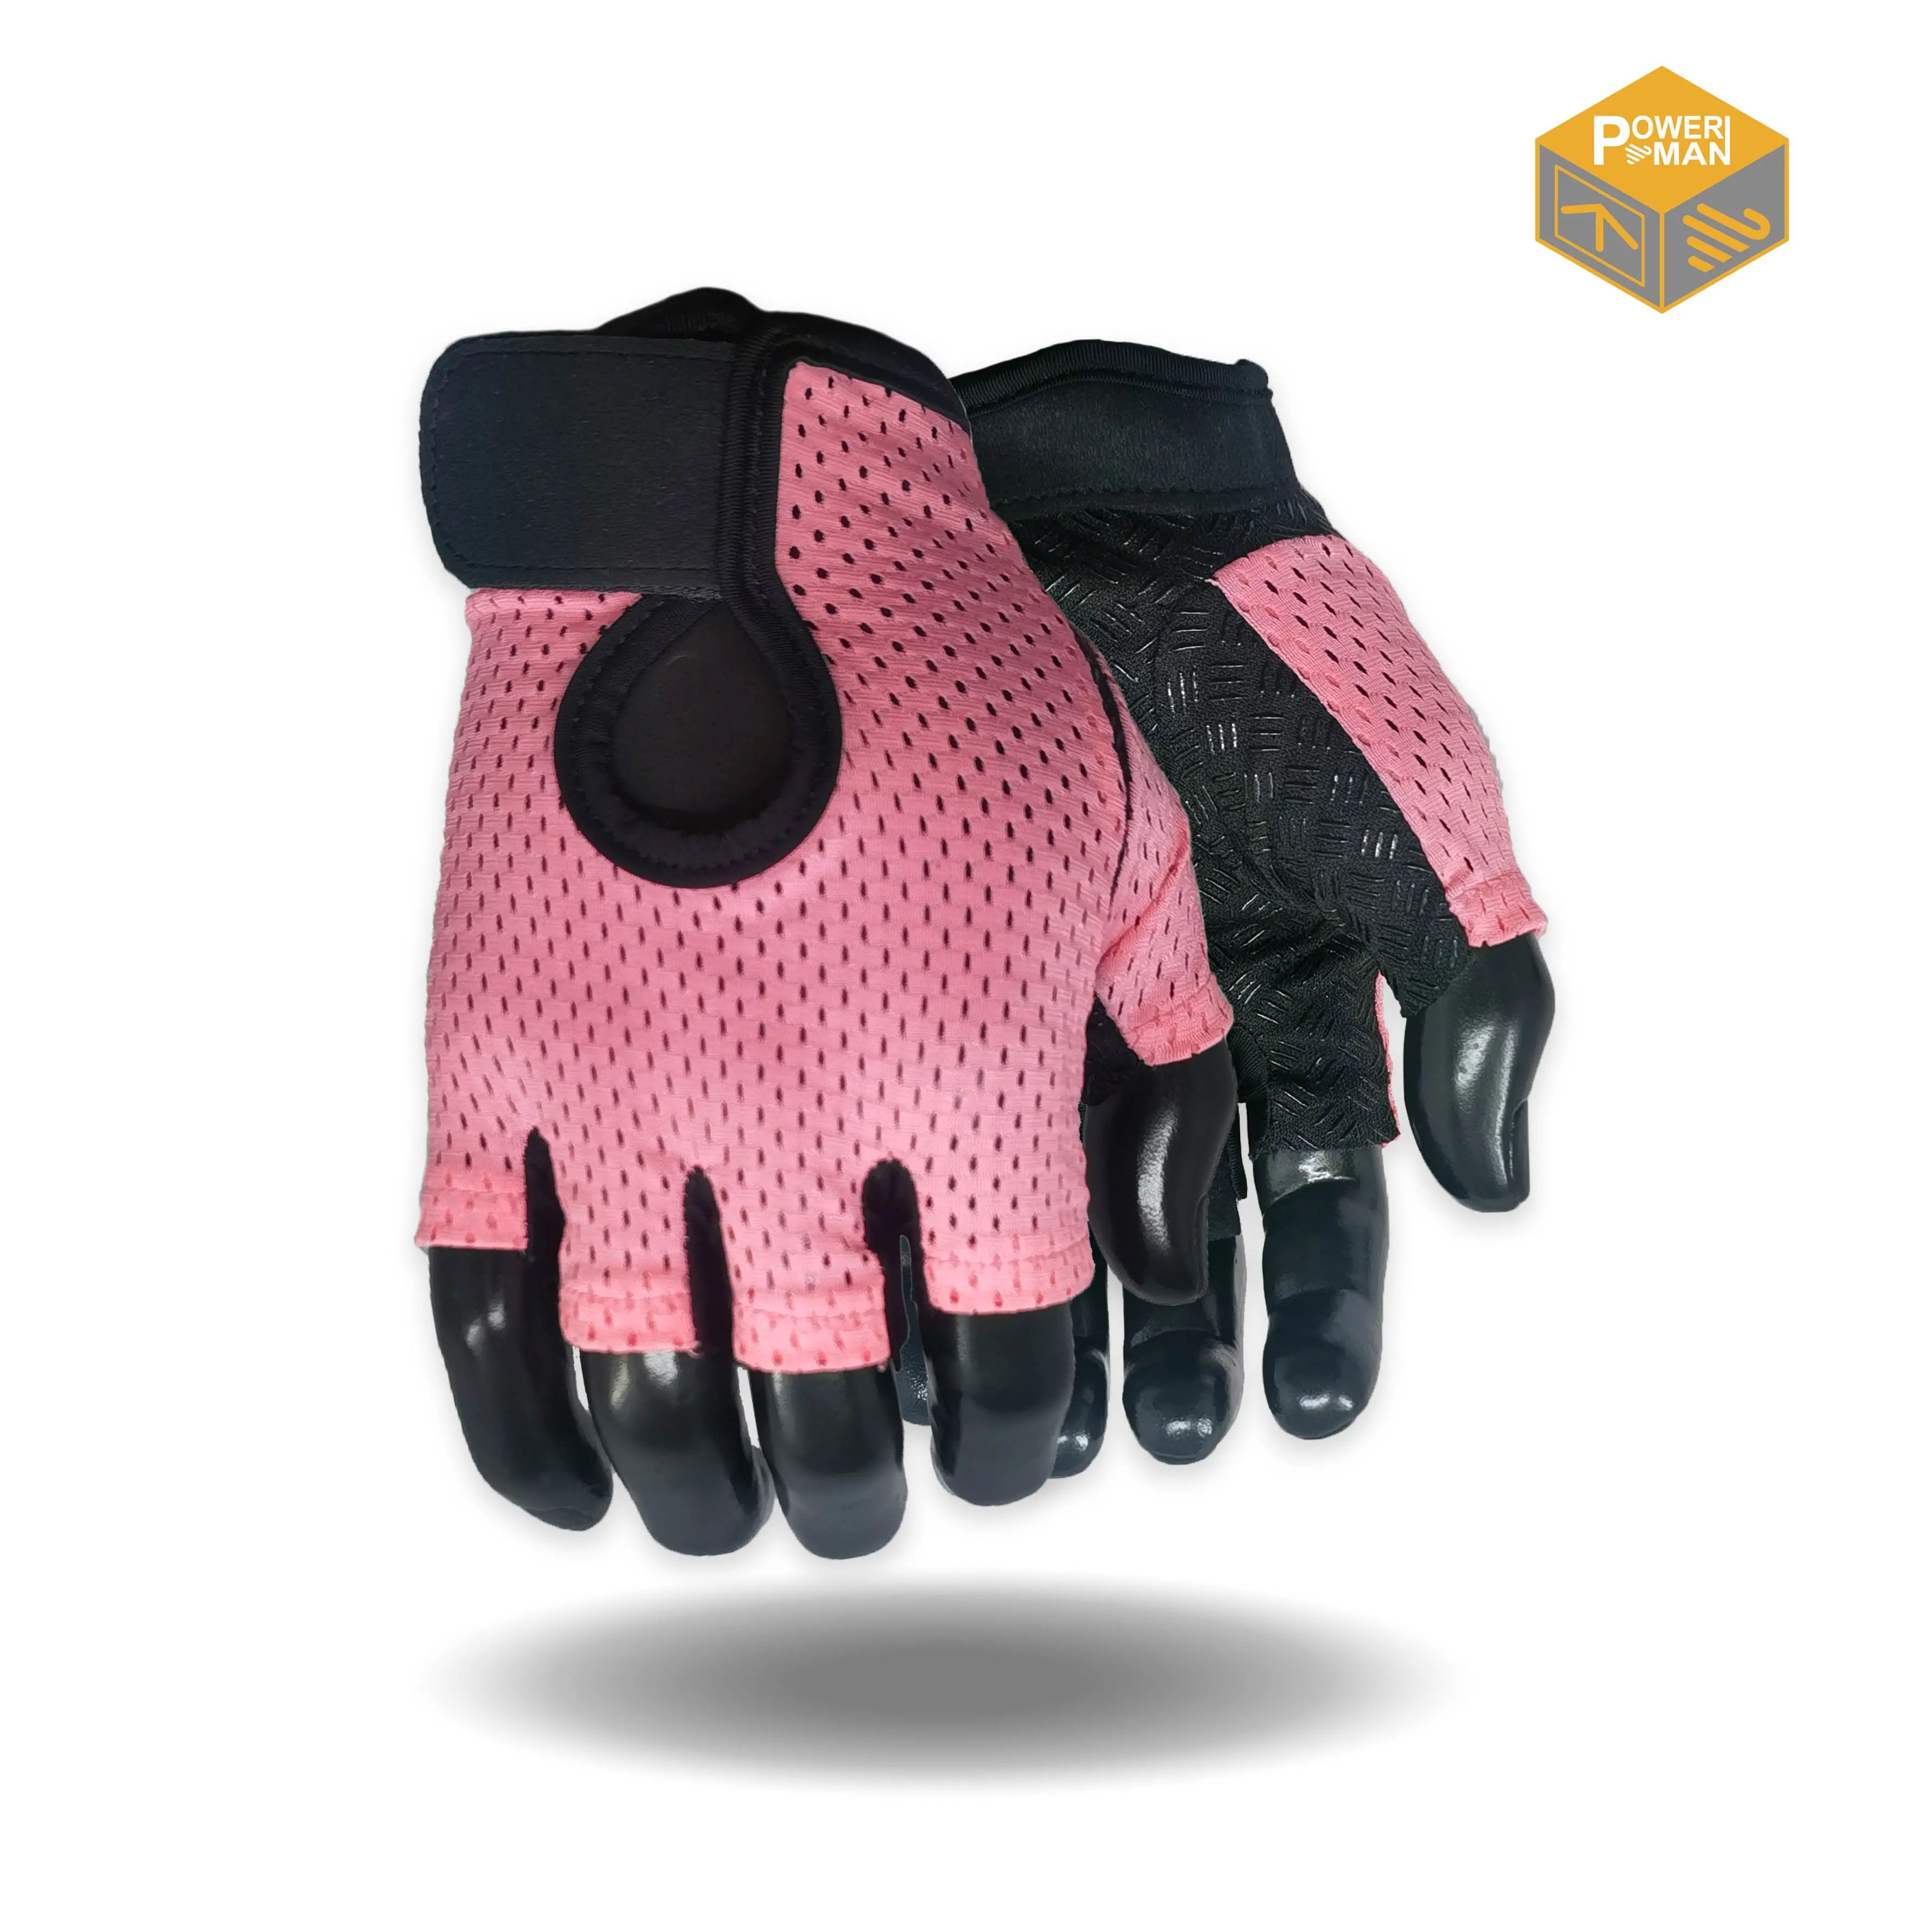 Powerman® Premium Fishing Glove Design for Lady Featured Image